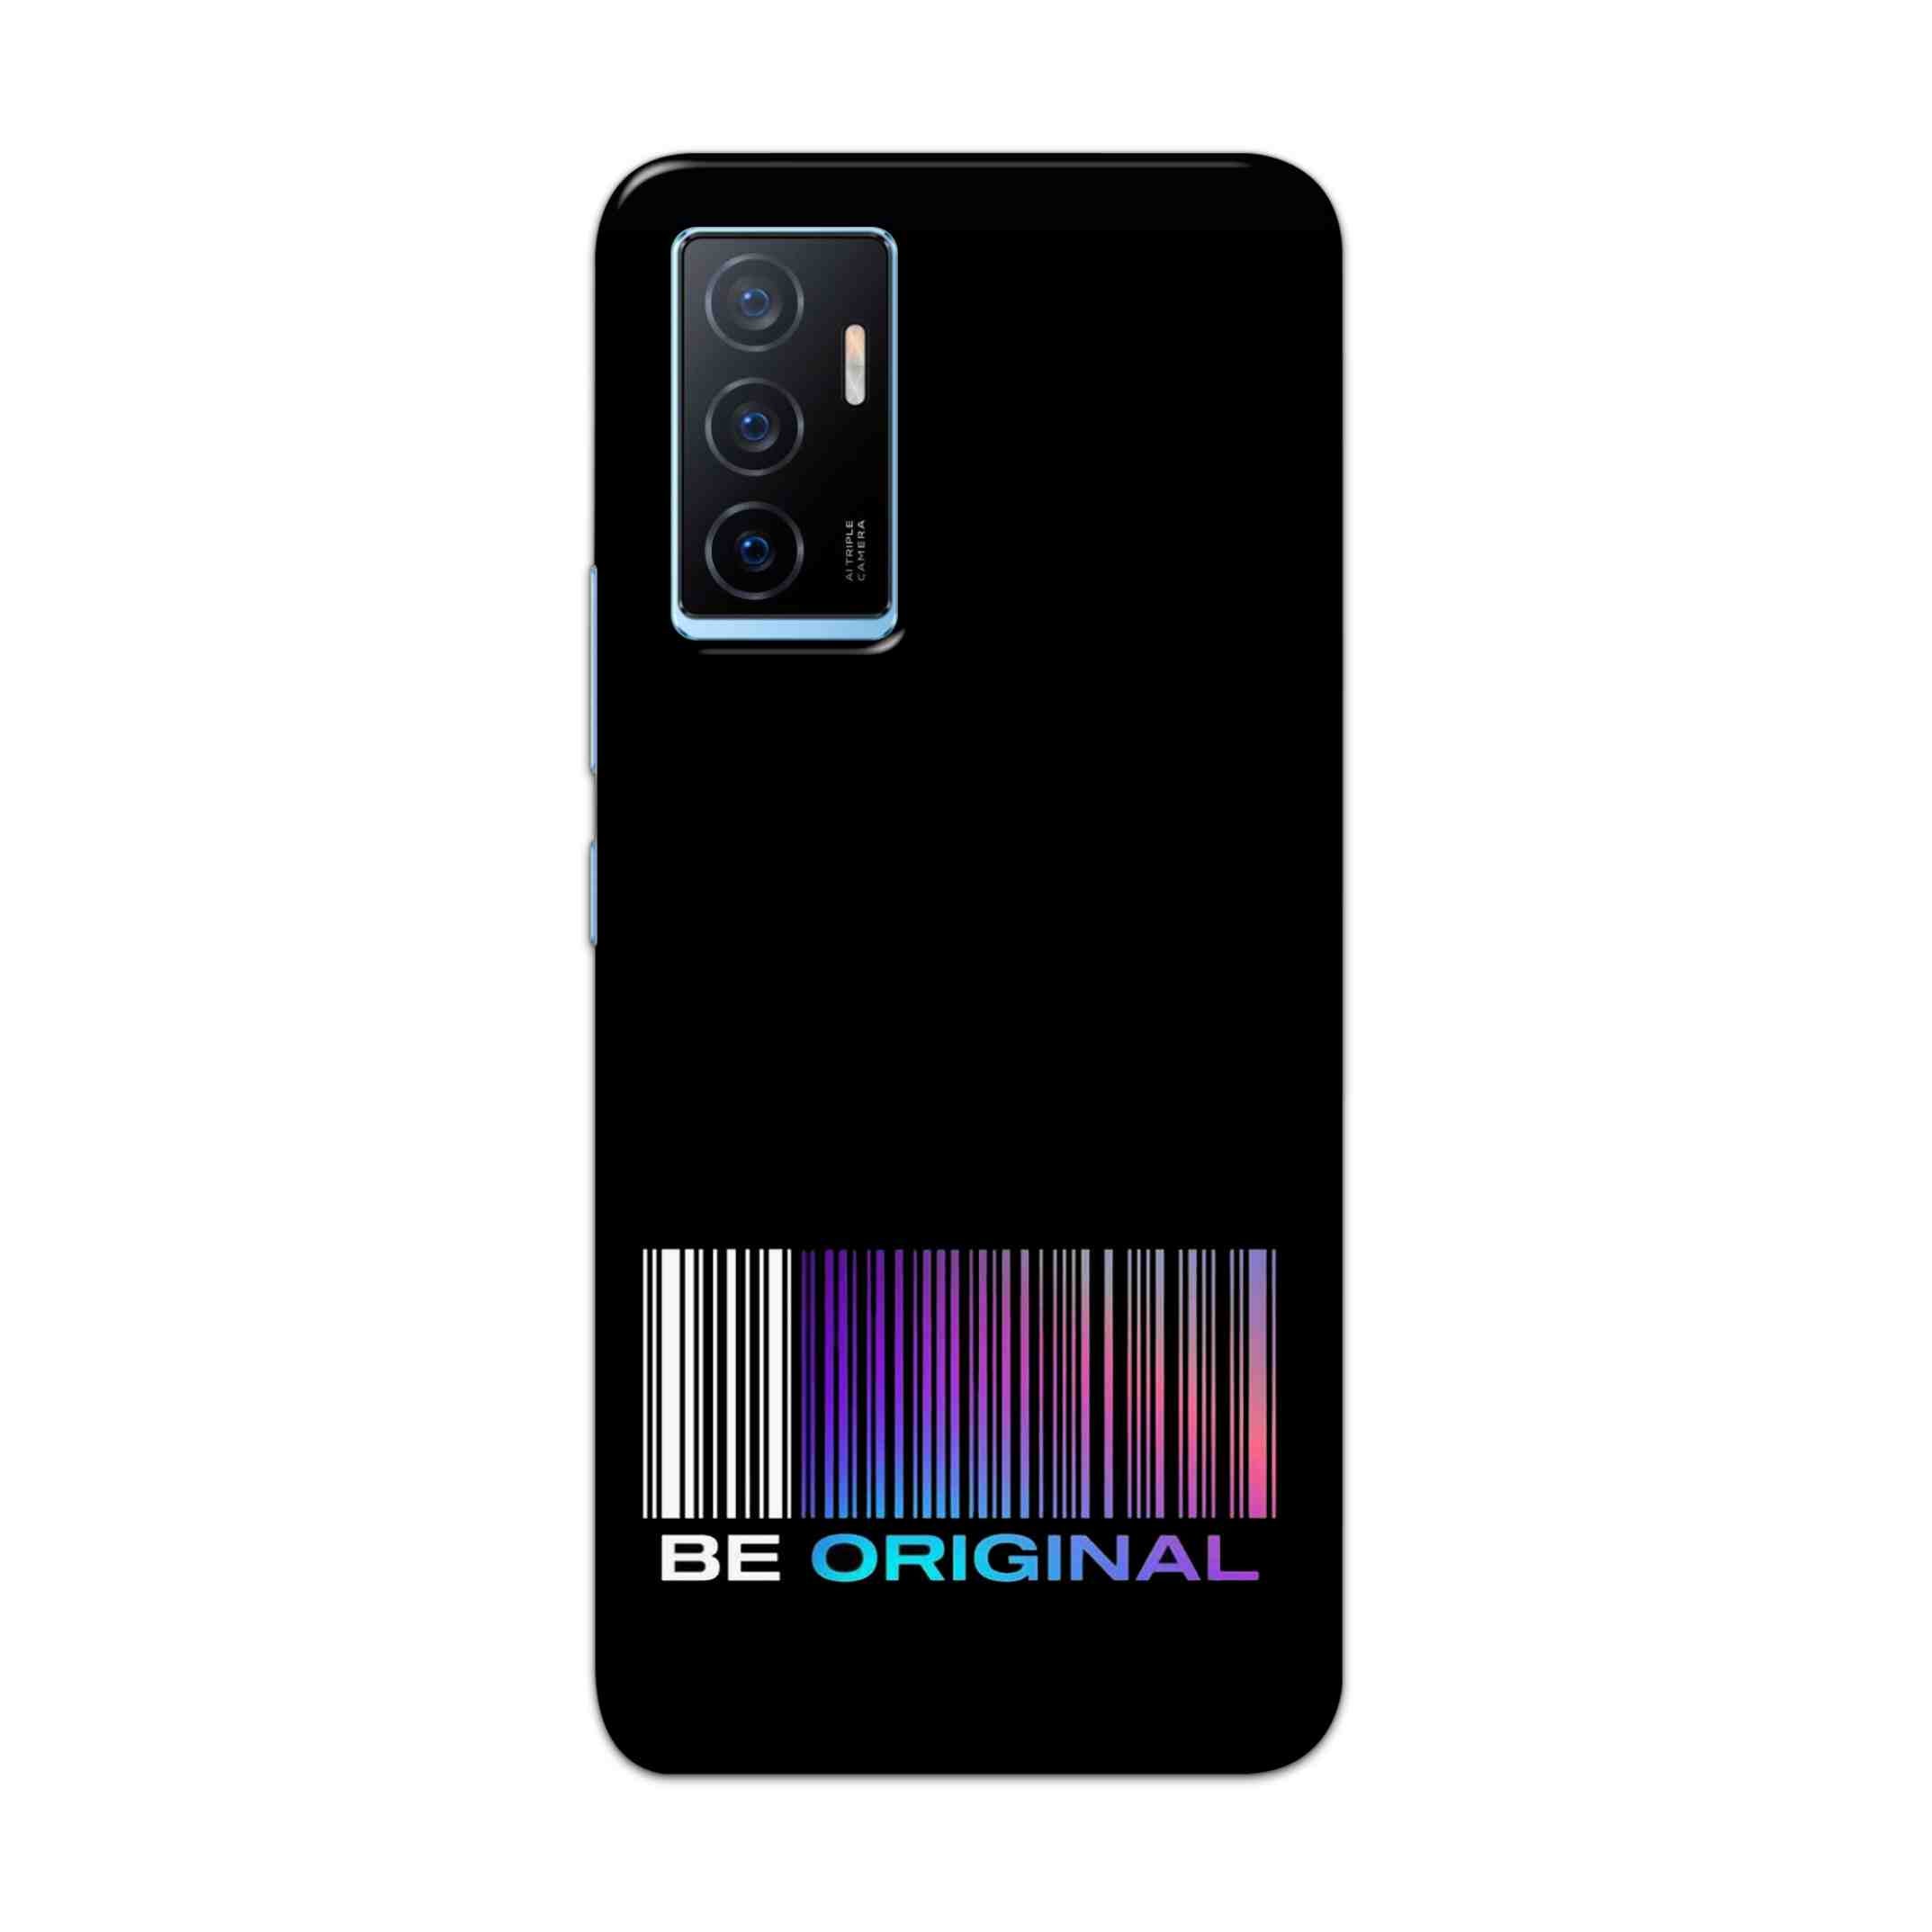 Buy Be Original Hard Back Mobile Phone Case Cover For Vivo Y75 4G Online